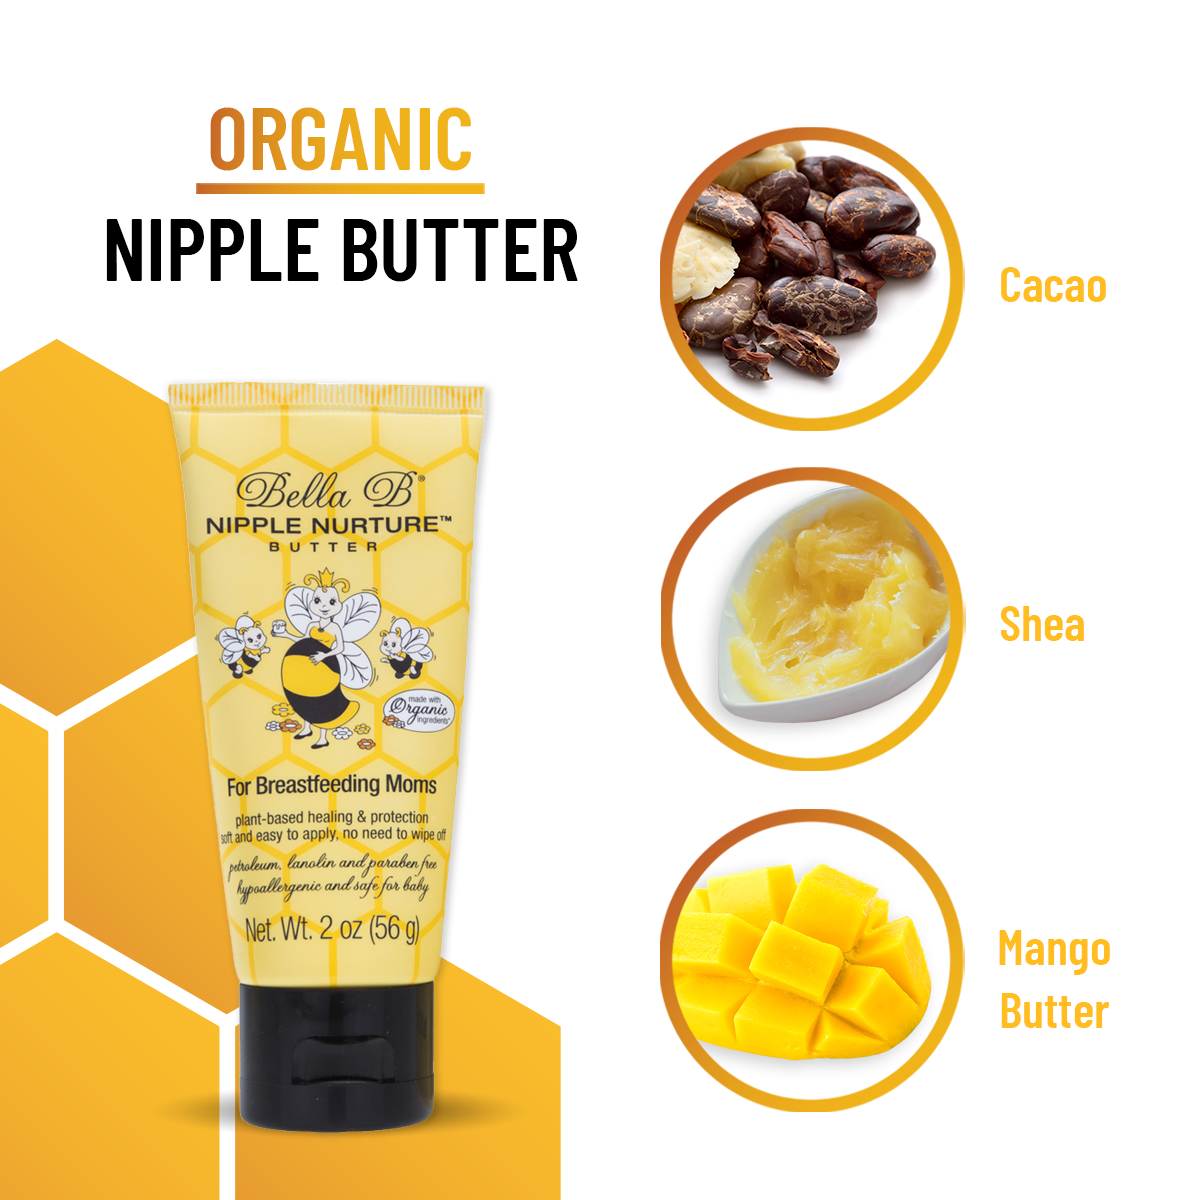 Organic Nipple Cream for Breastfeeding